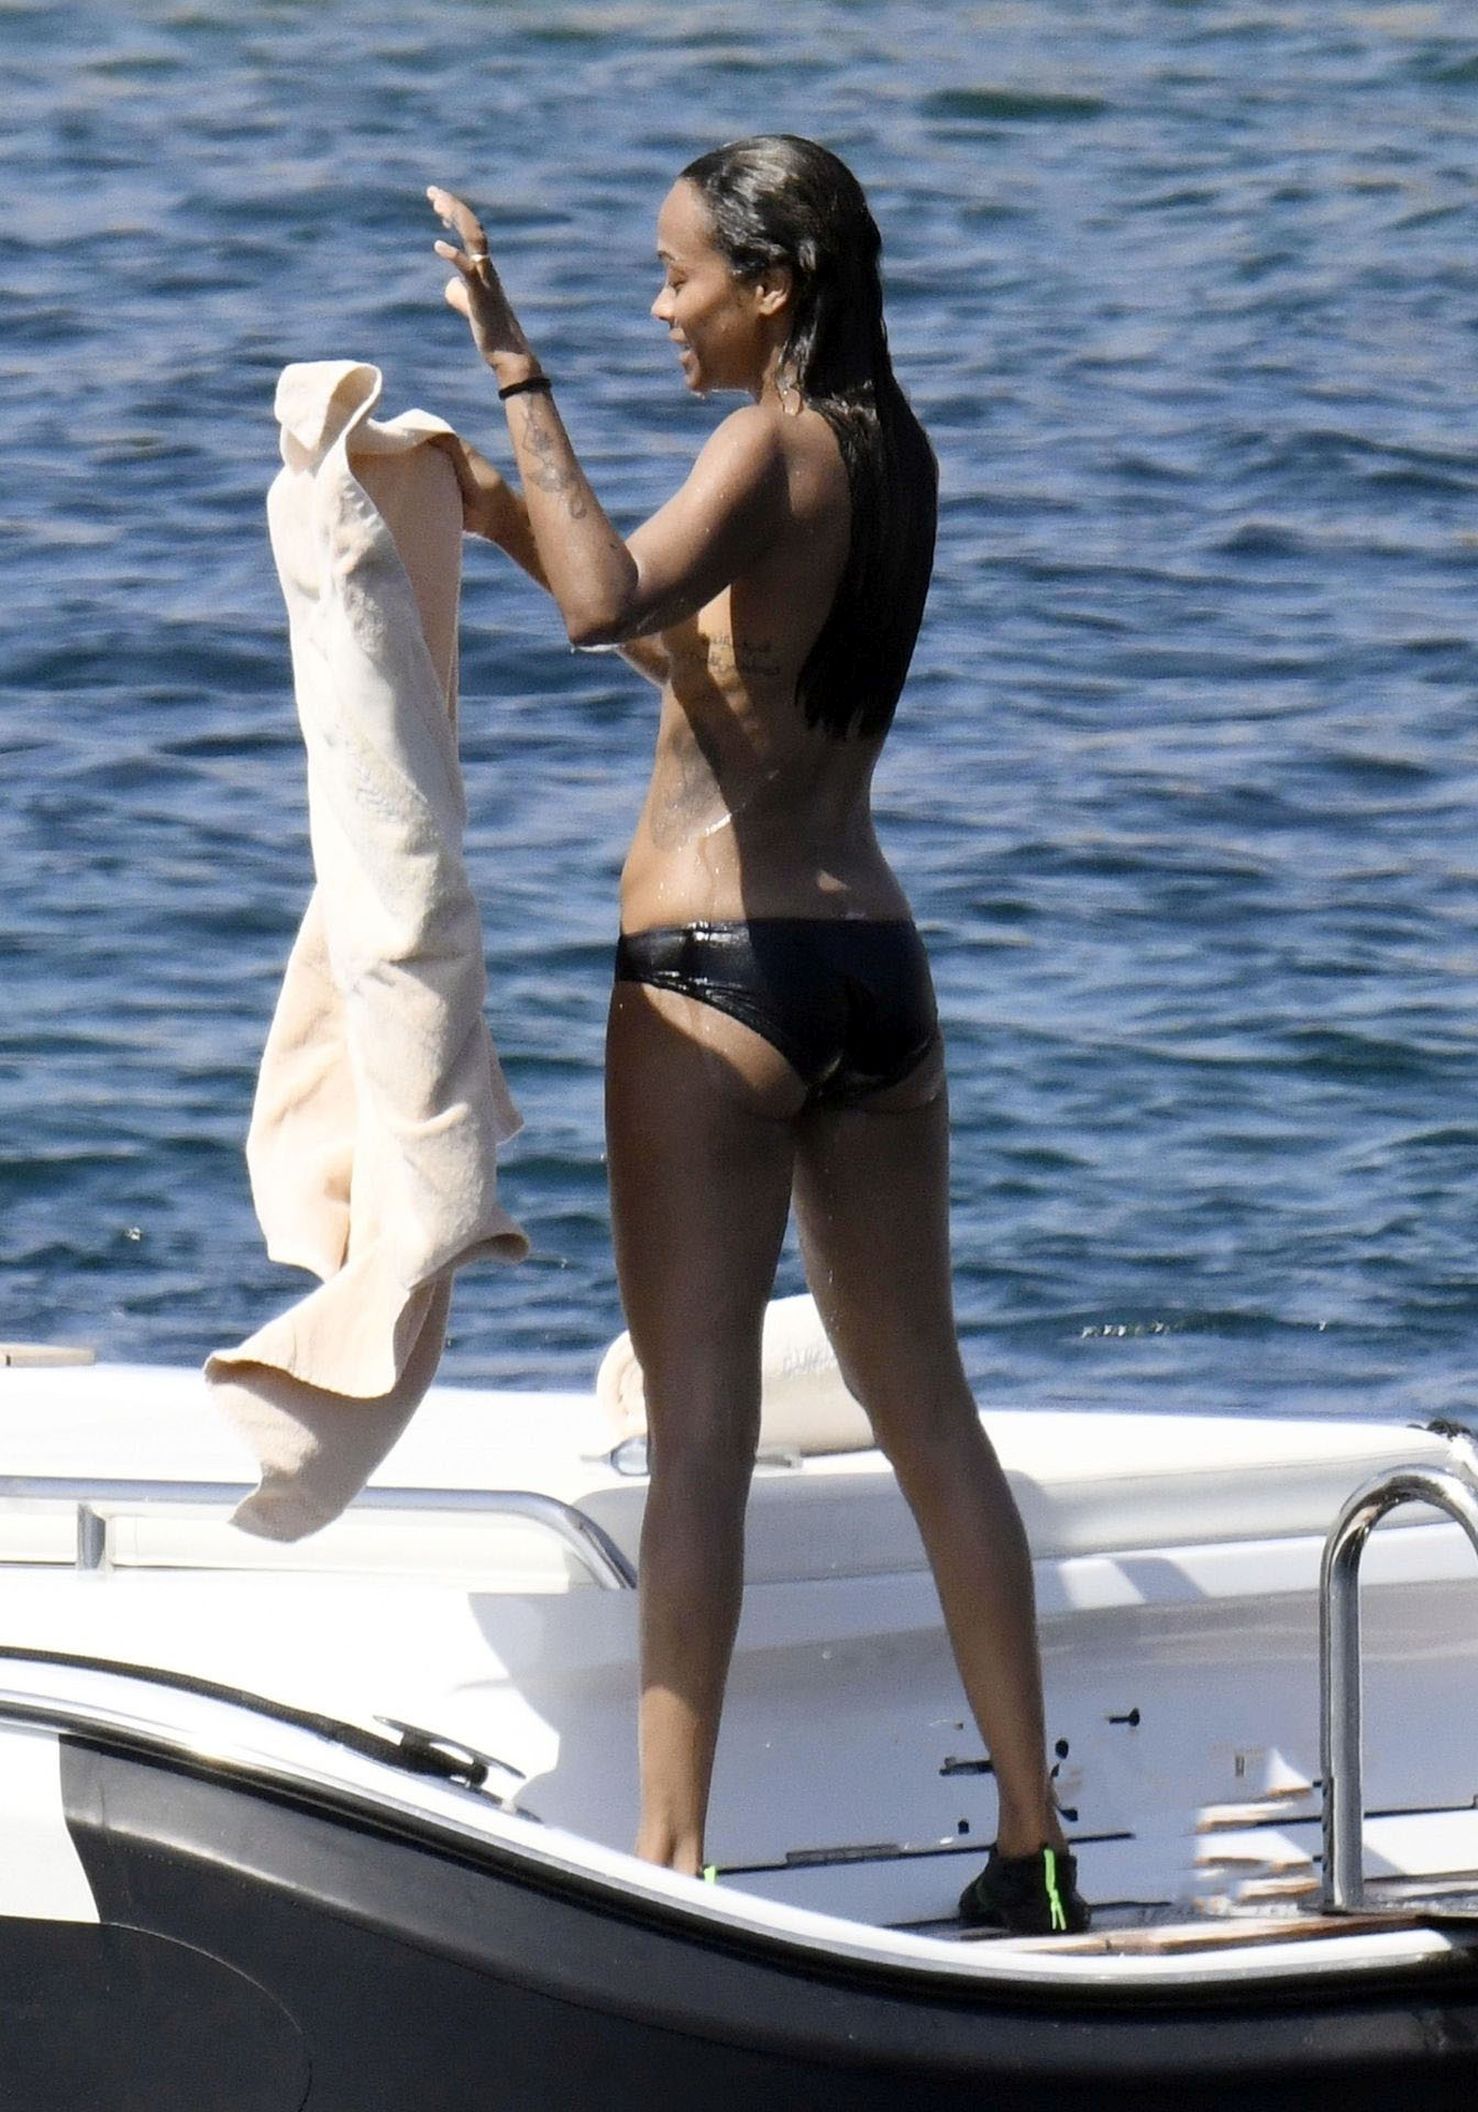 Zoe Saldana Goes Topless on a Boat.